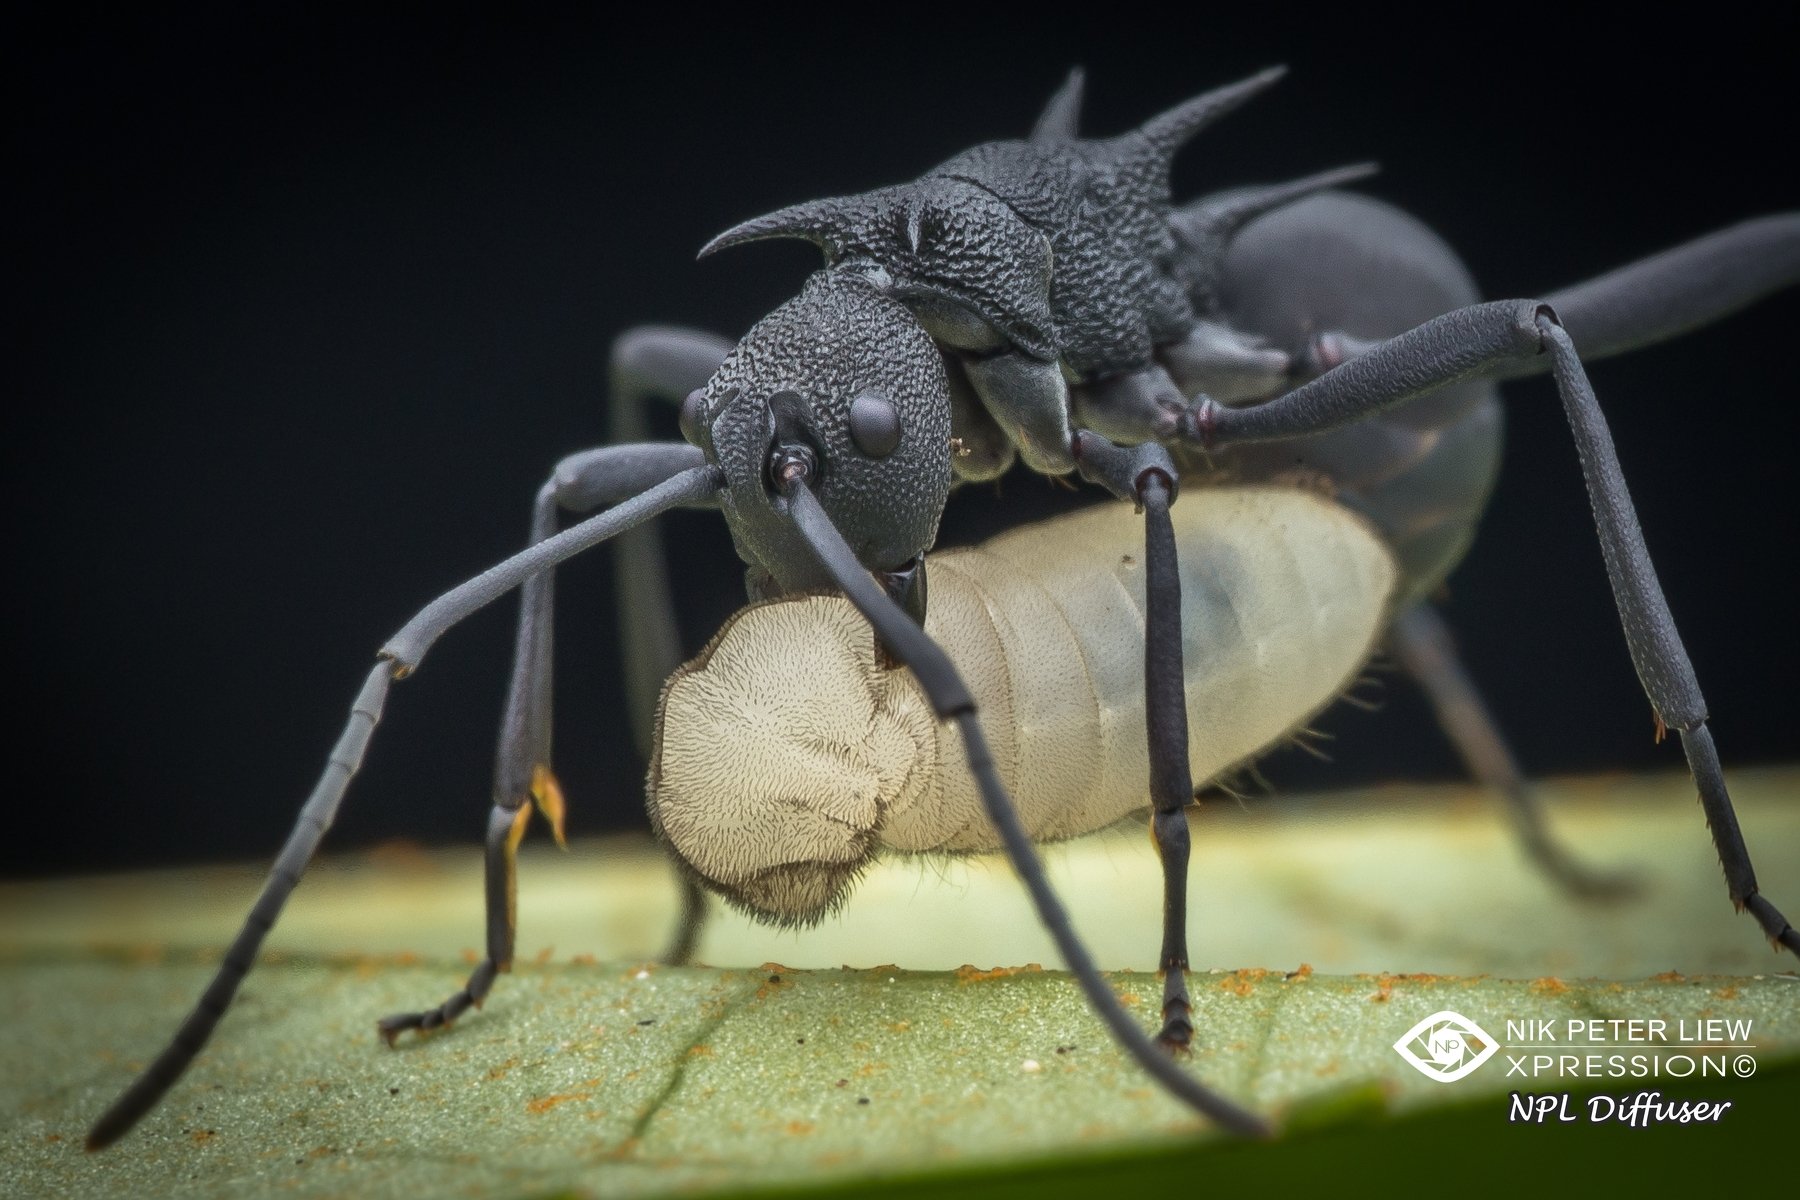 #spiny ant #nature #npl, Nik Peter Liew